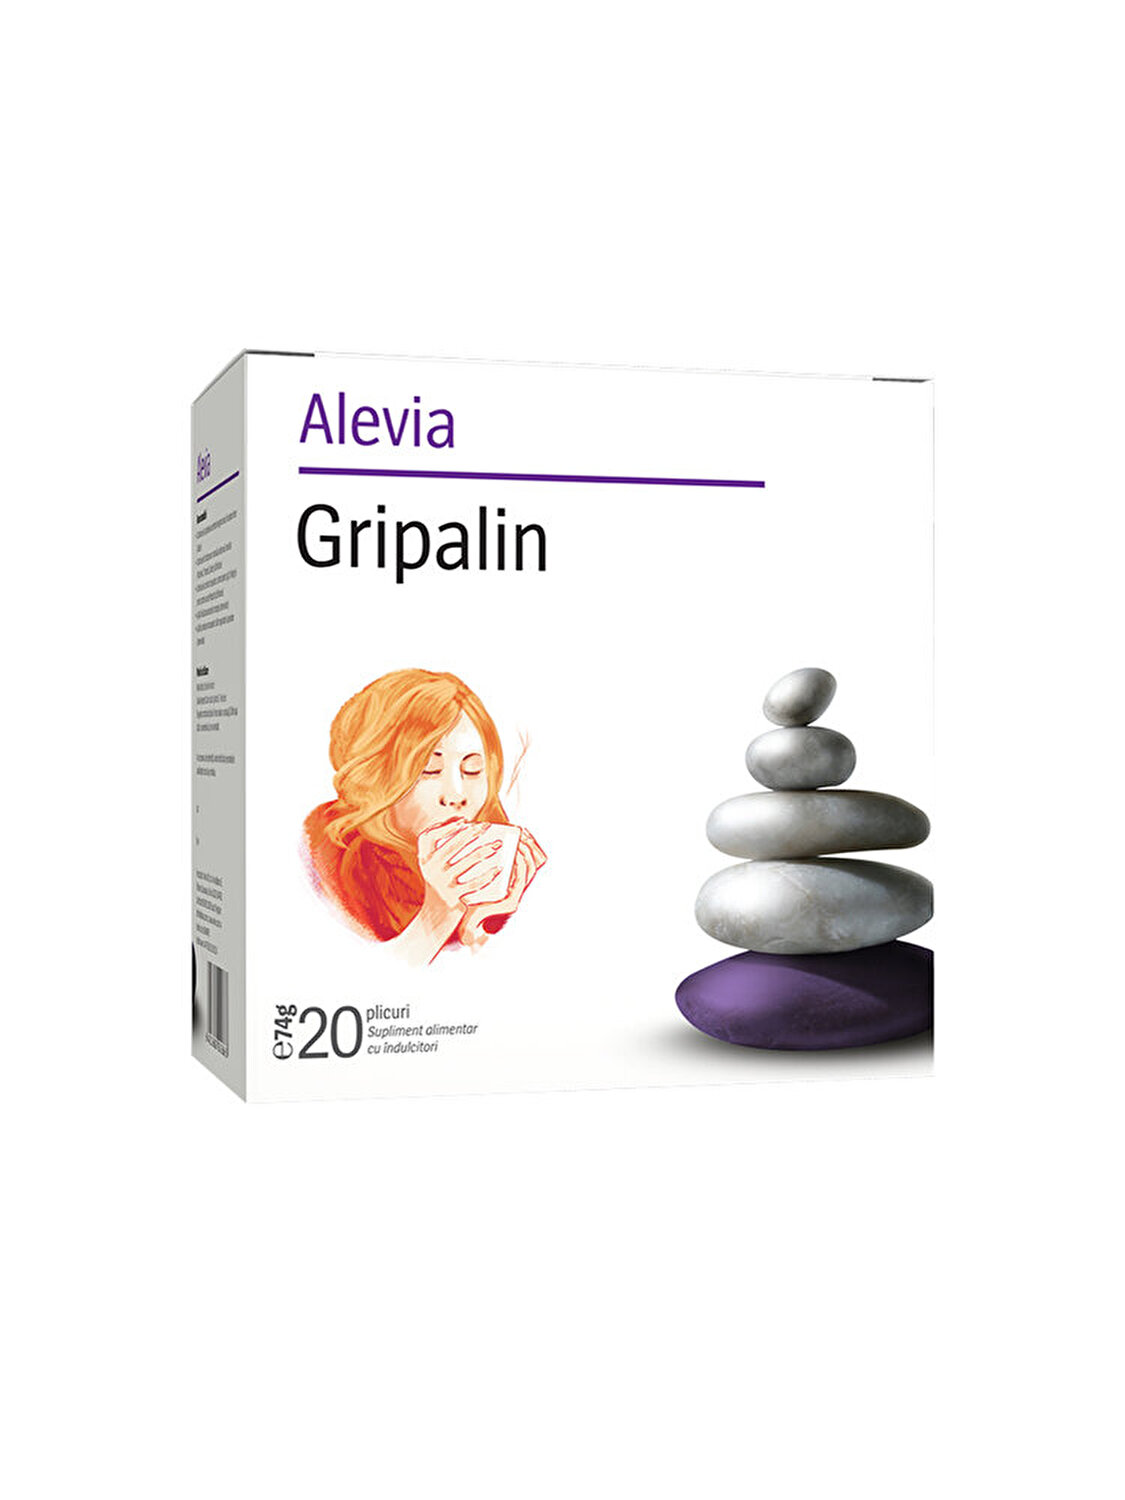 Imunitate - ALEVIA GRIPALIN 20PL, axafarm.ro